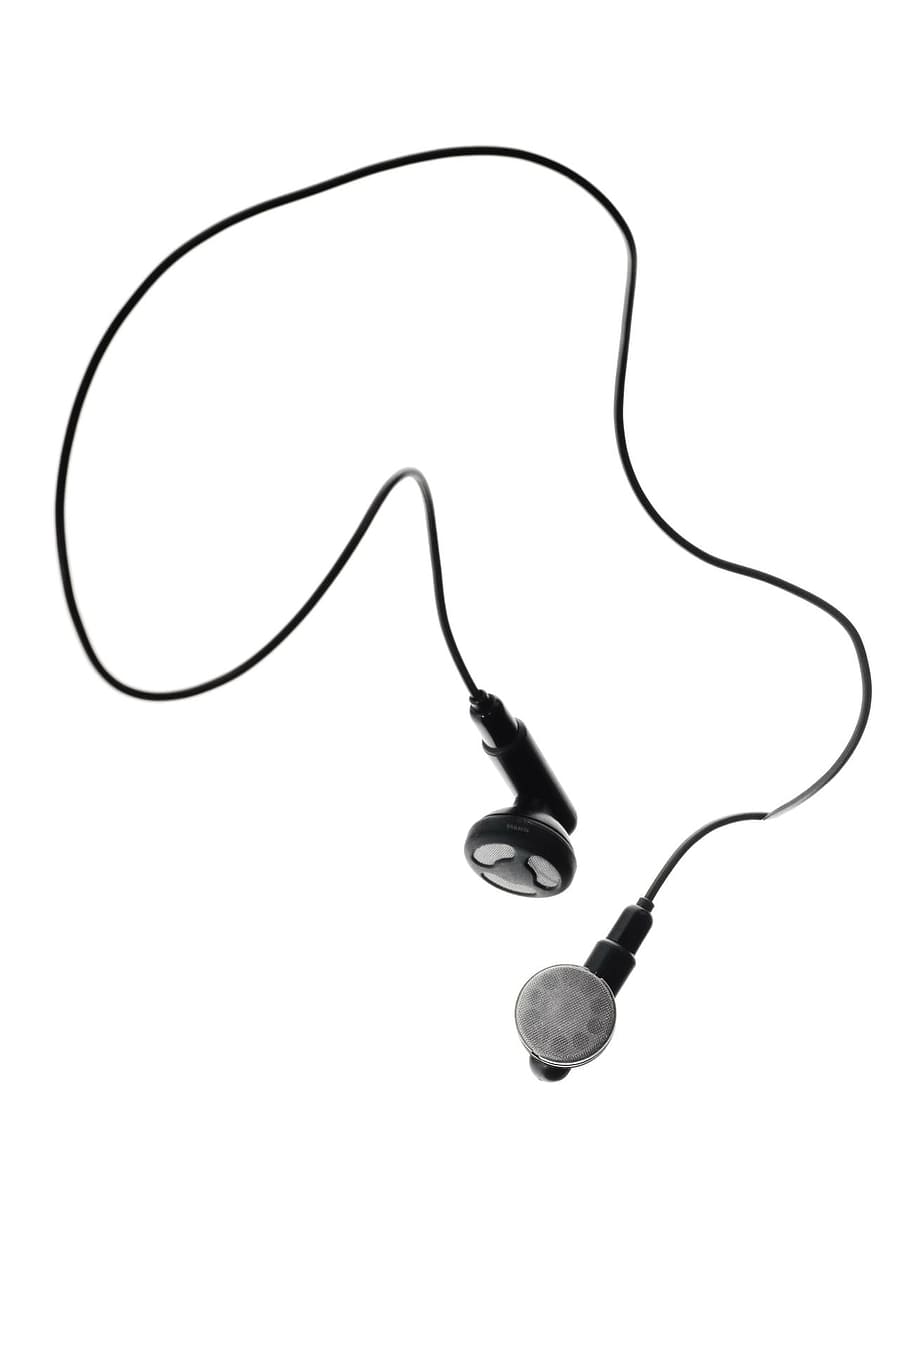 audio, cable, close-up, ear-bud, earbud, earphones, electronics